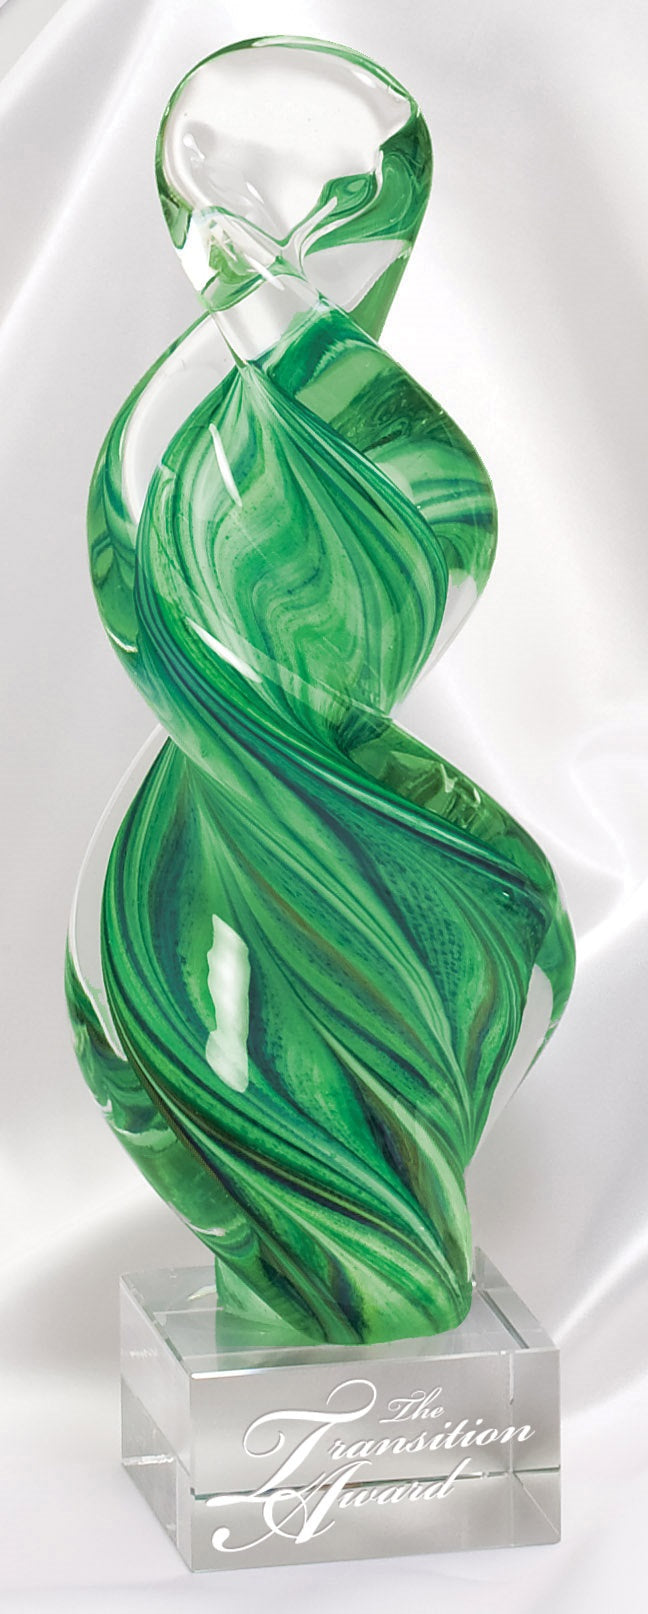 Swirled Art Glass Award